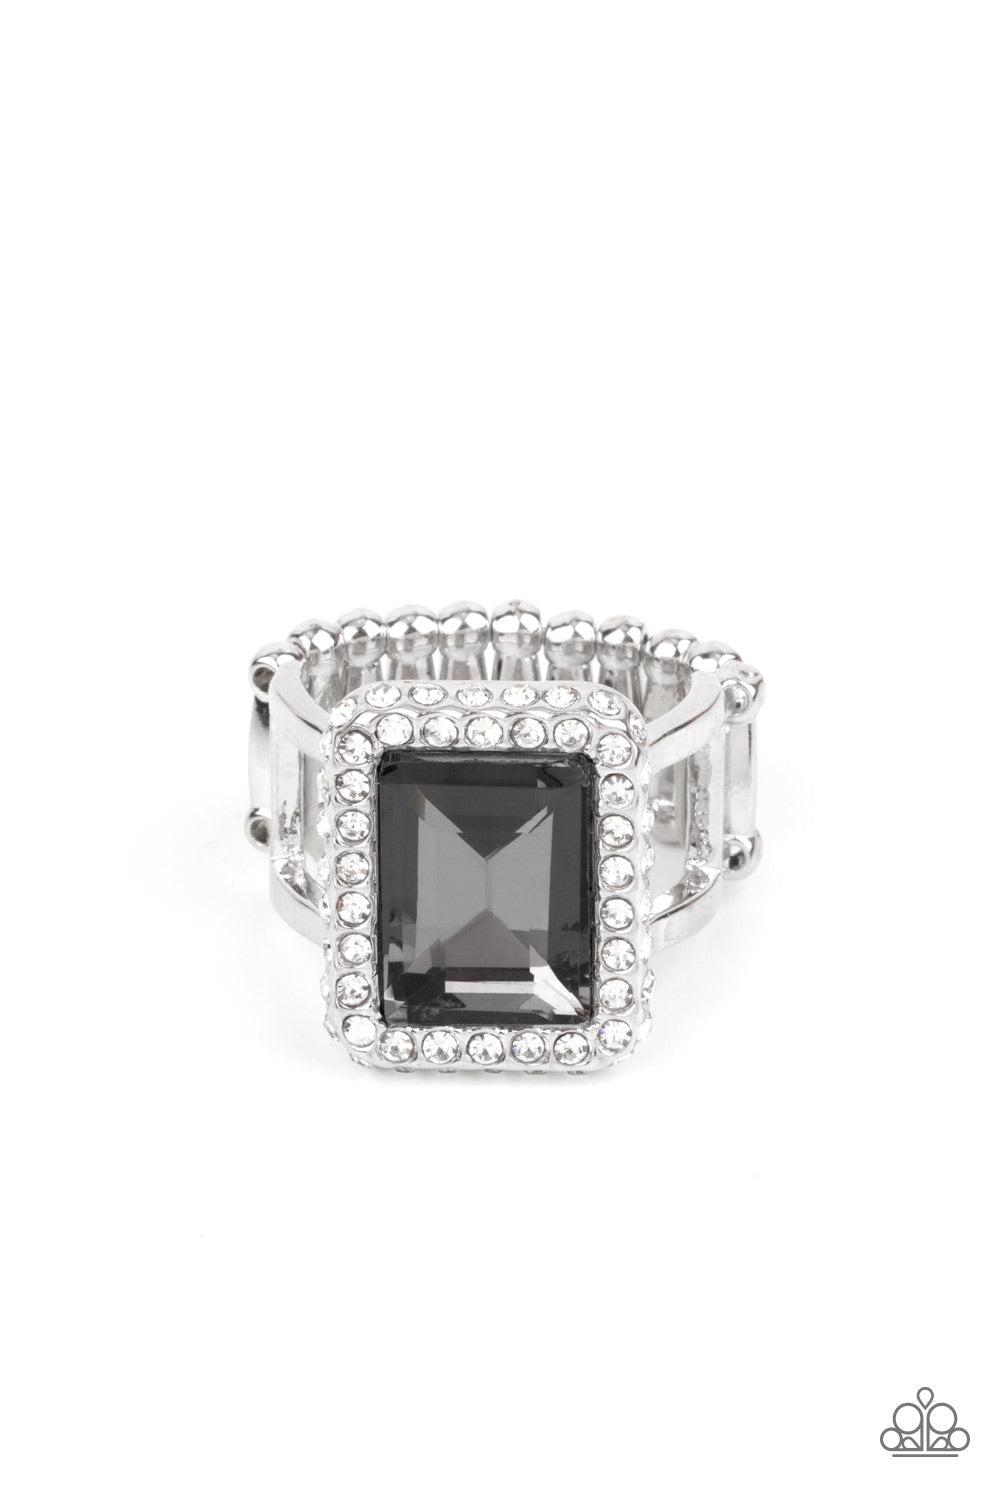 Glamorously Glitzy Silver Rhinestone Ring - Paparazzi Accessories- lightbox - CarasShop.com - $5 Jewelry by Cara Jewels